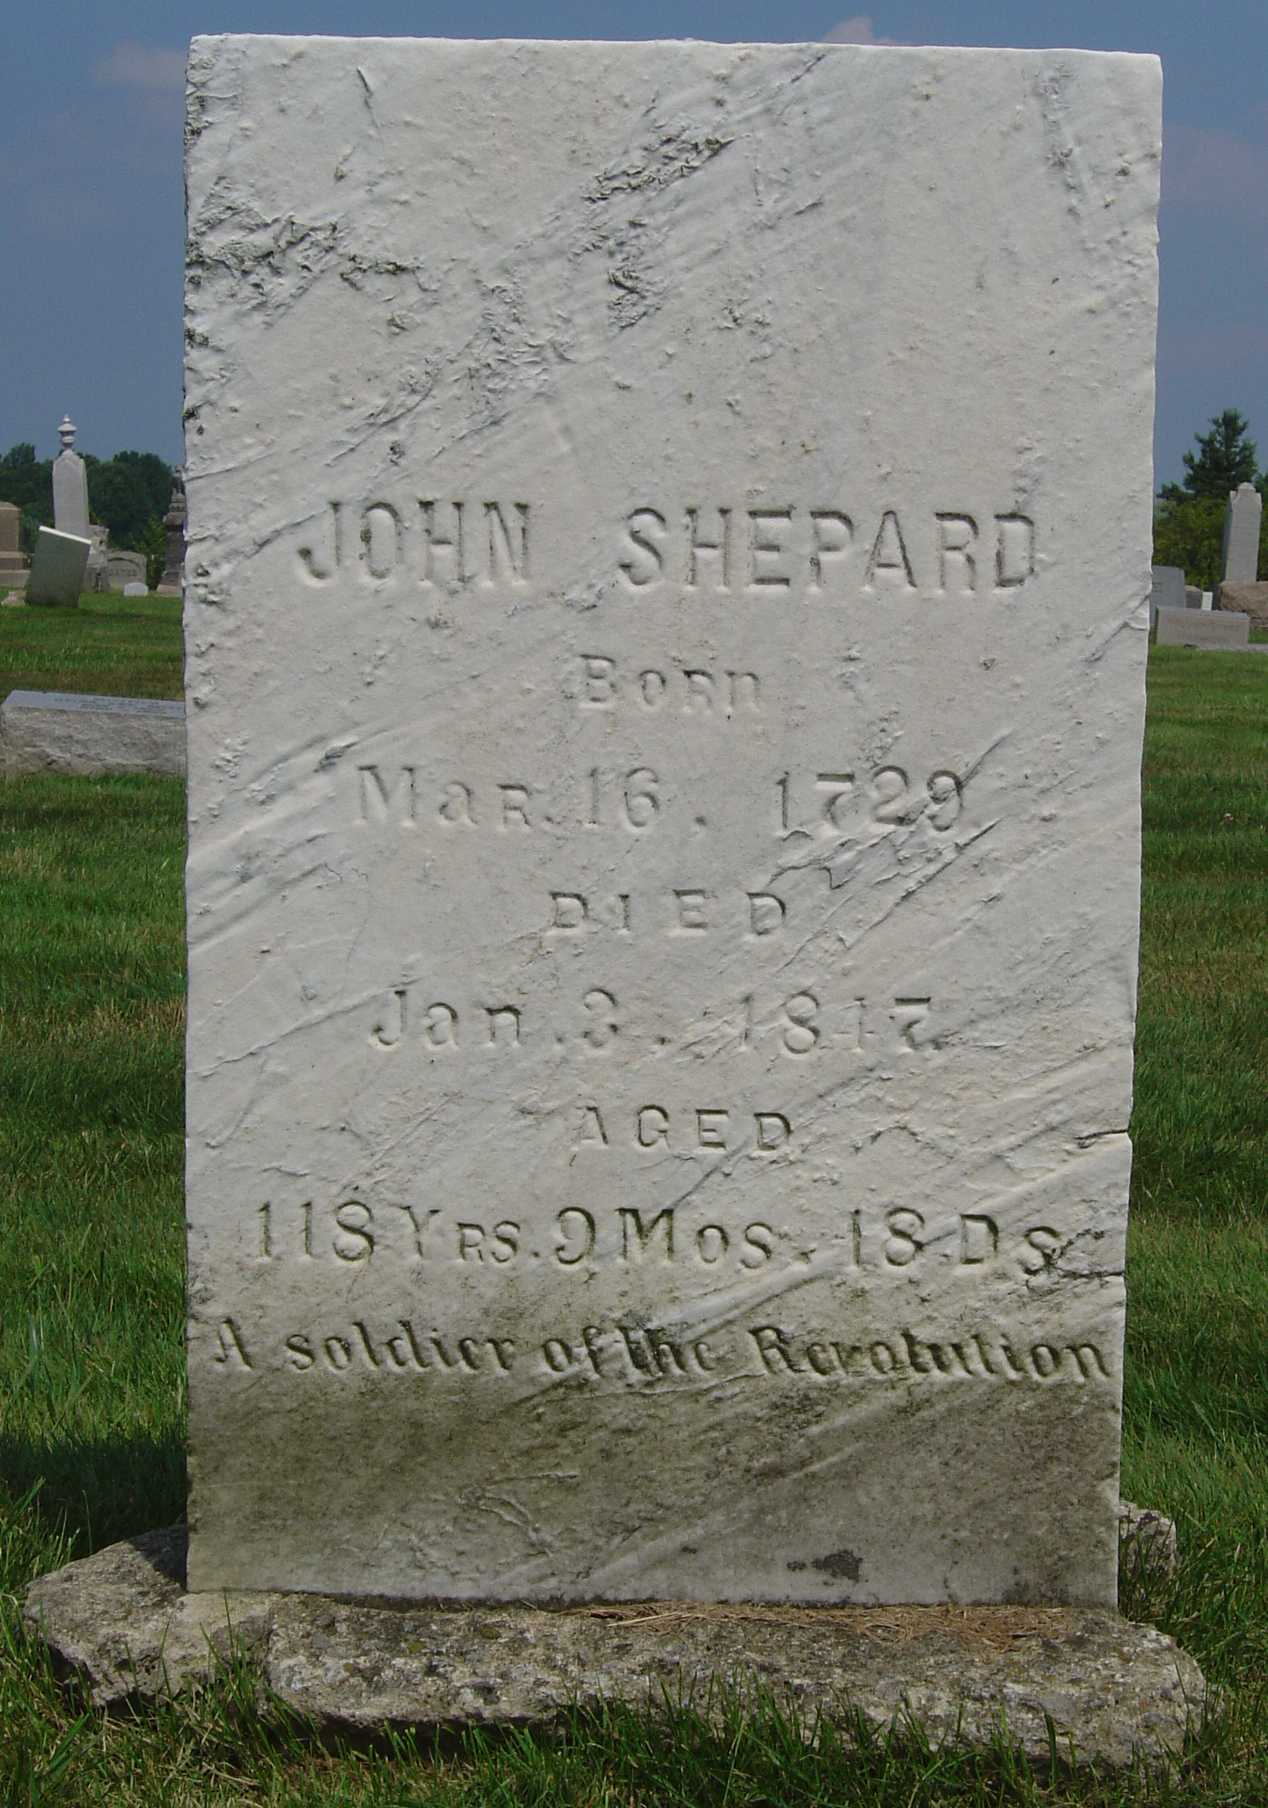 John Shepherd's grave in North Royalton, Ohio